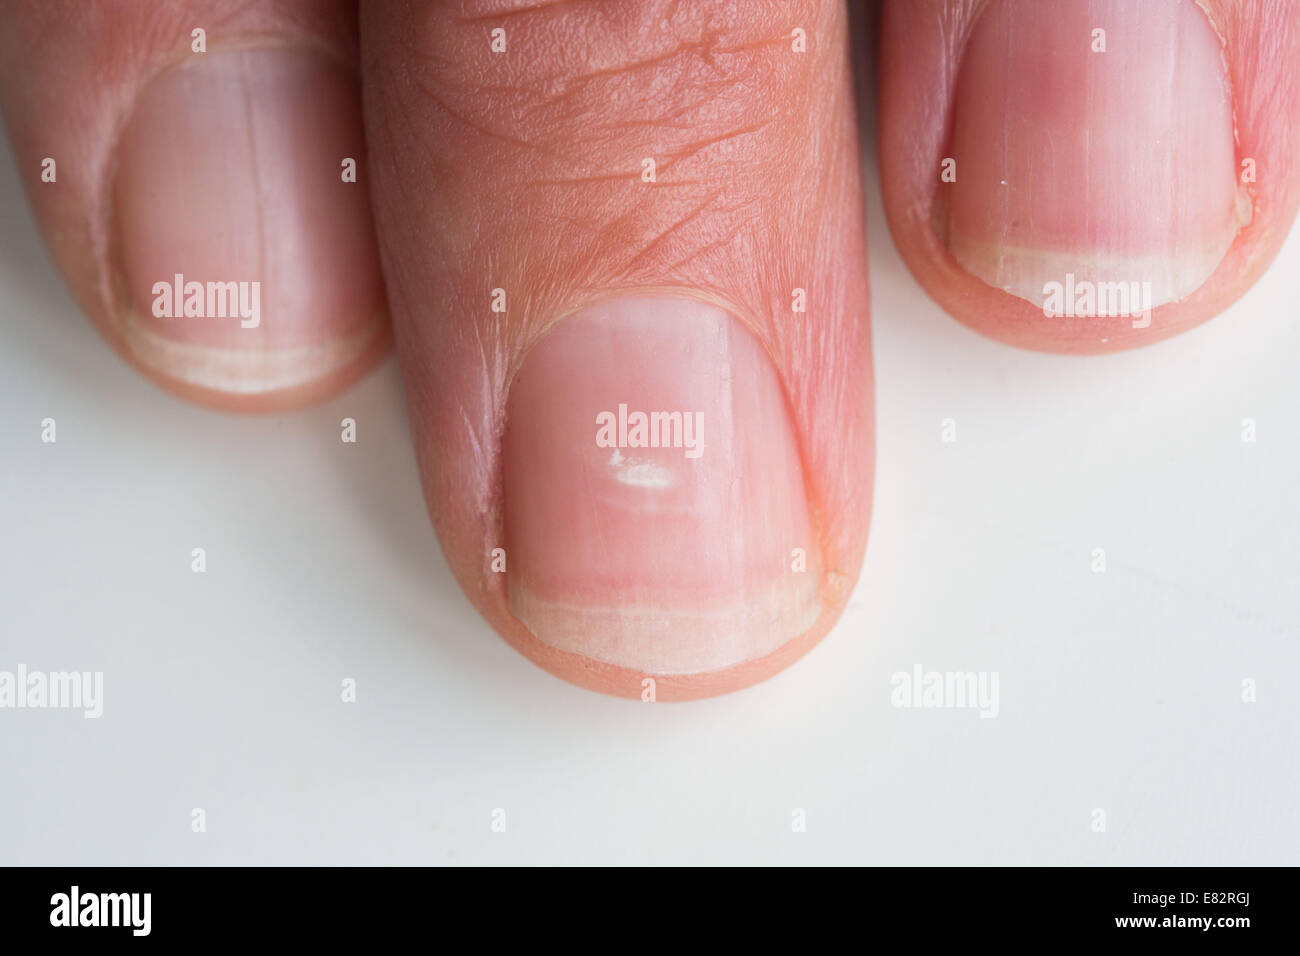 White spot on a nail Stock Photo - Alamy